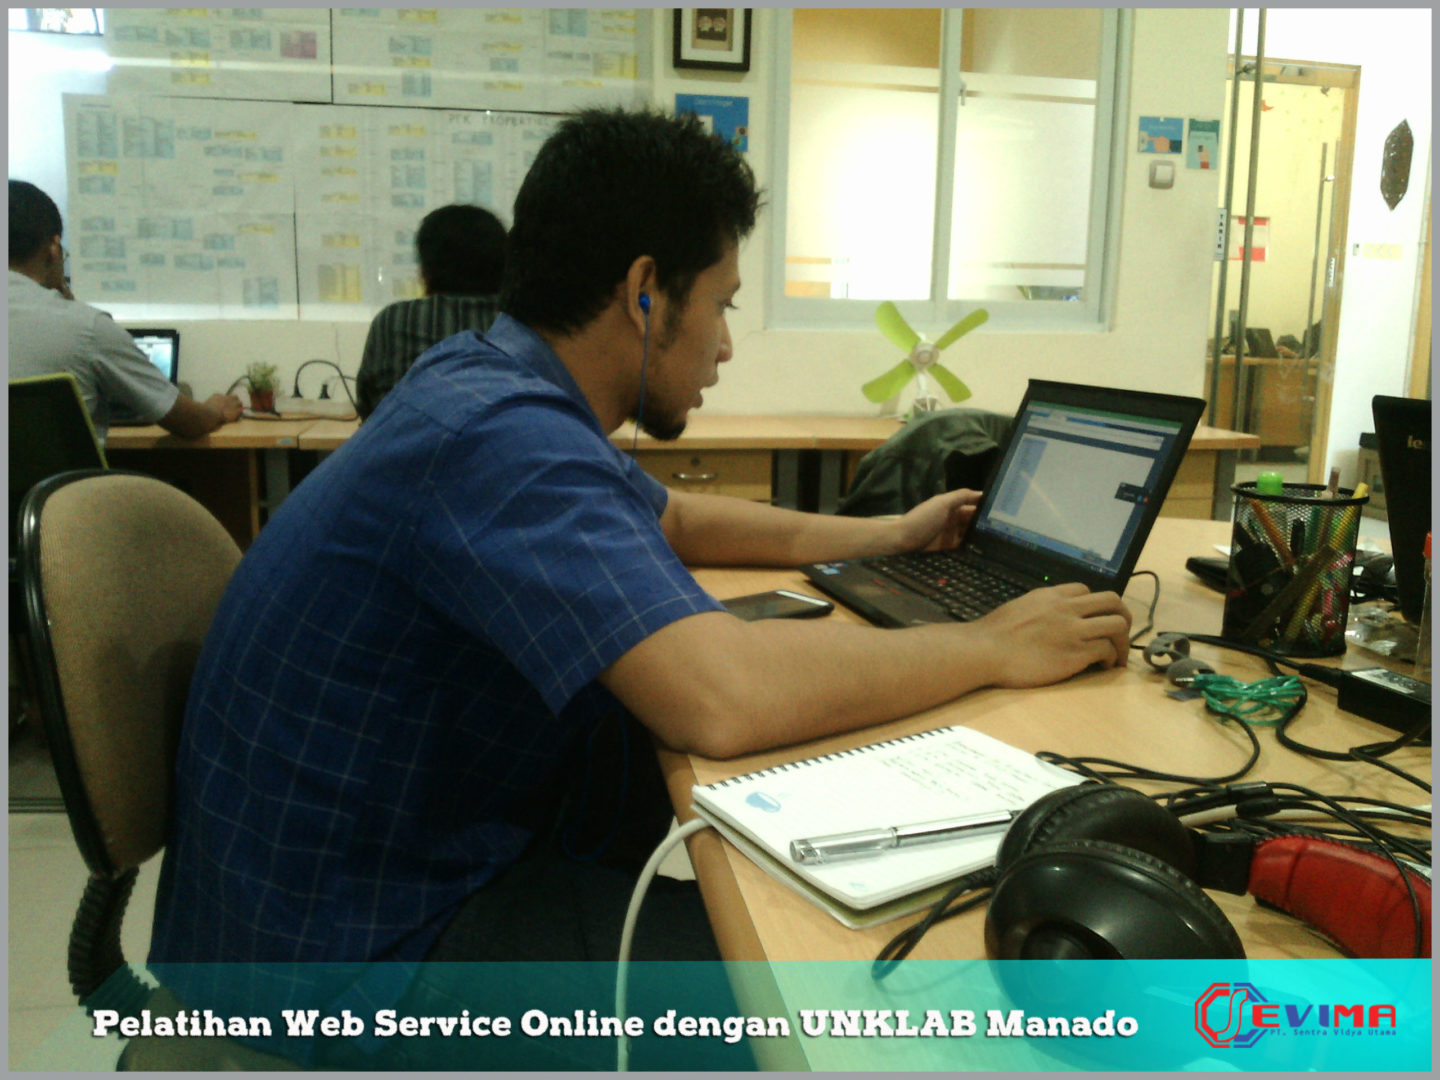 Pelatihan Web Service Online dengan Universitas Klabat (UNKLAB) Manado